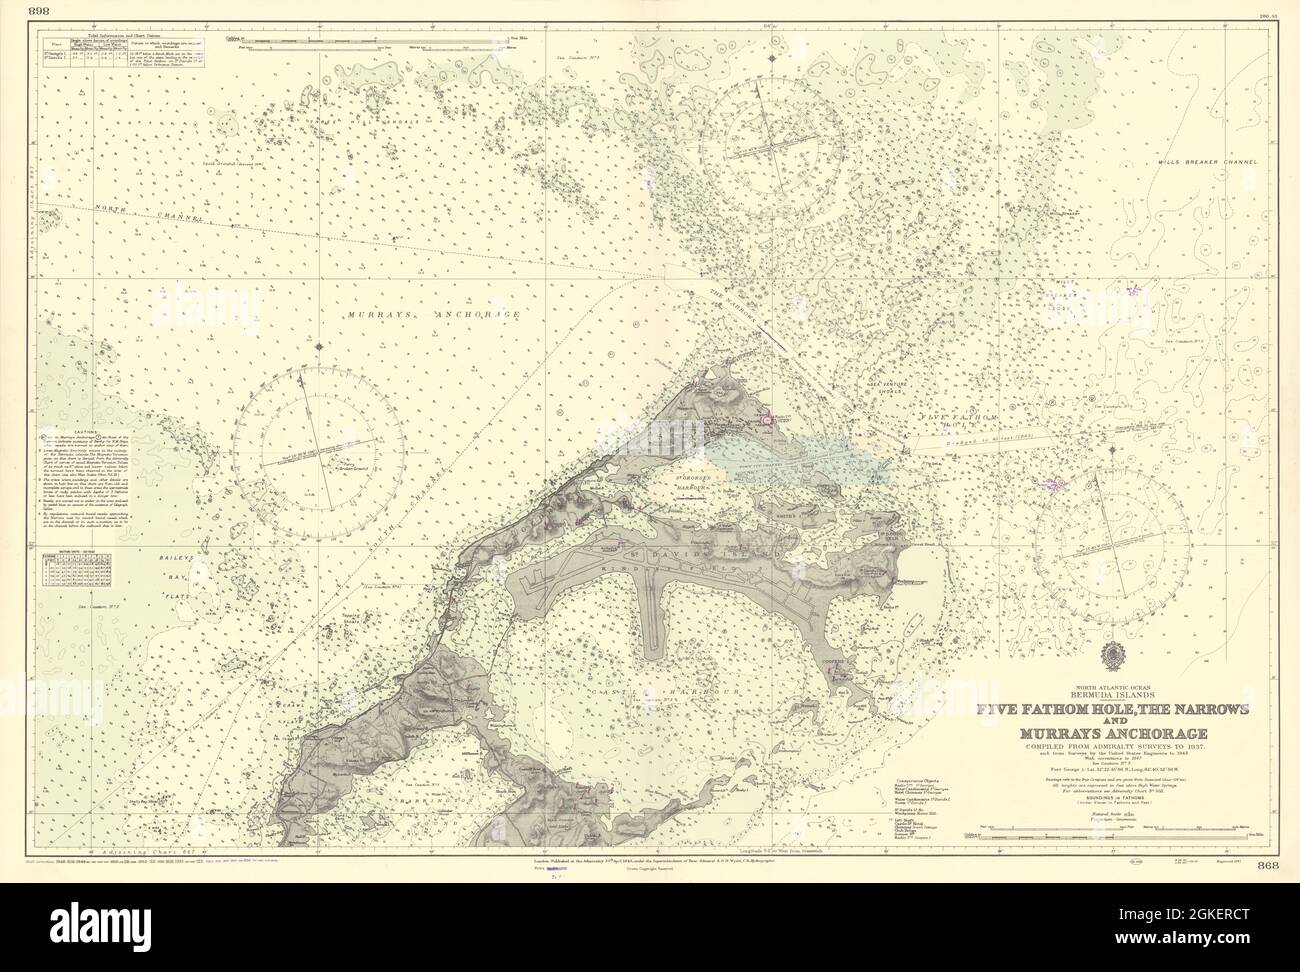 Bermuda 5 Fathom Hole Narrows Murrays Anchorage ADMIRALTY chart 1948 (1956) map Stock Photo